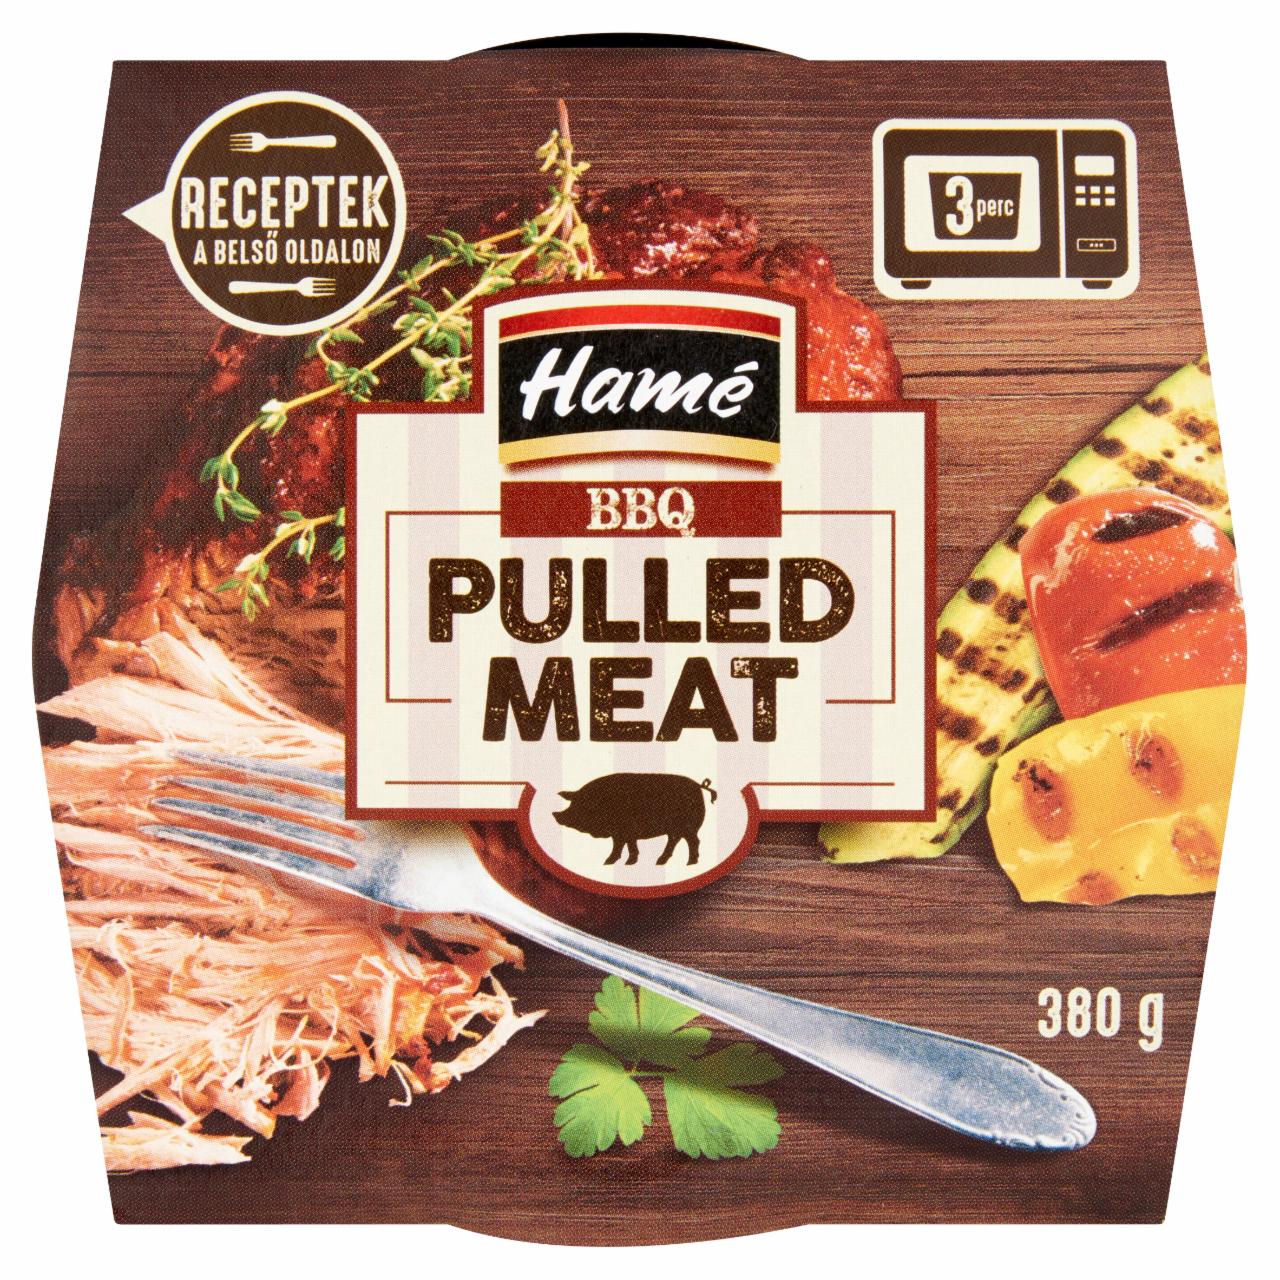 Képek - Hamé BBQ Pulled Meat konzerv 380 g